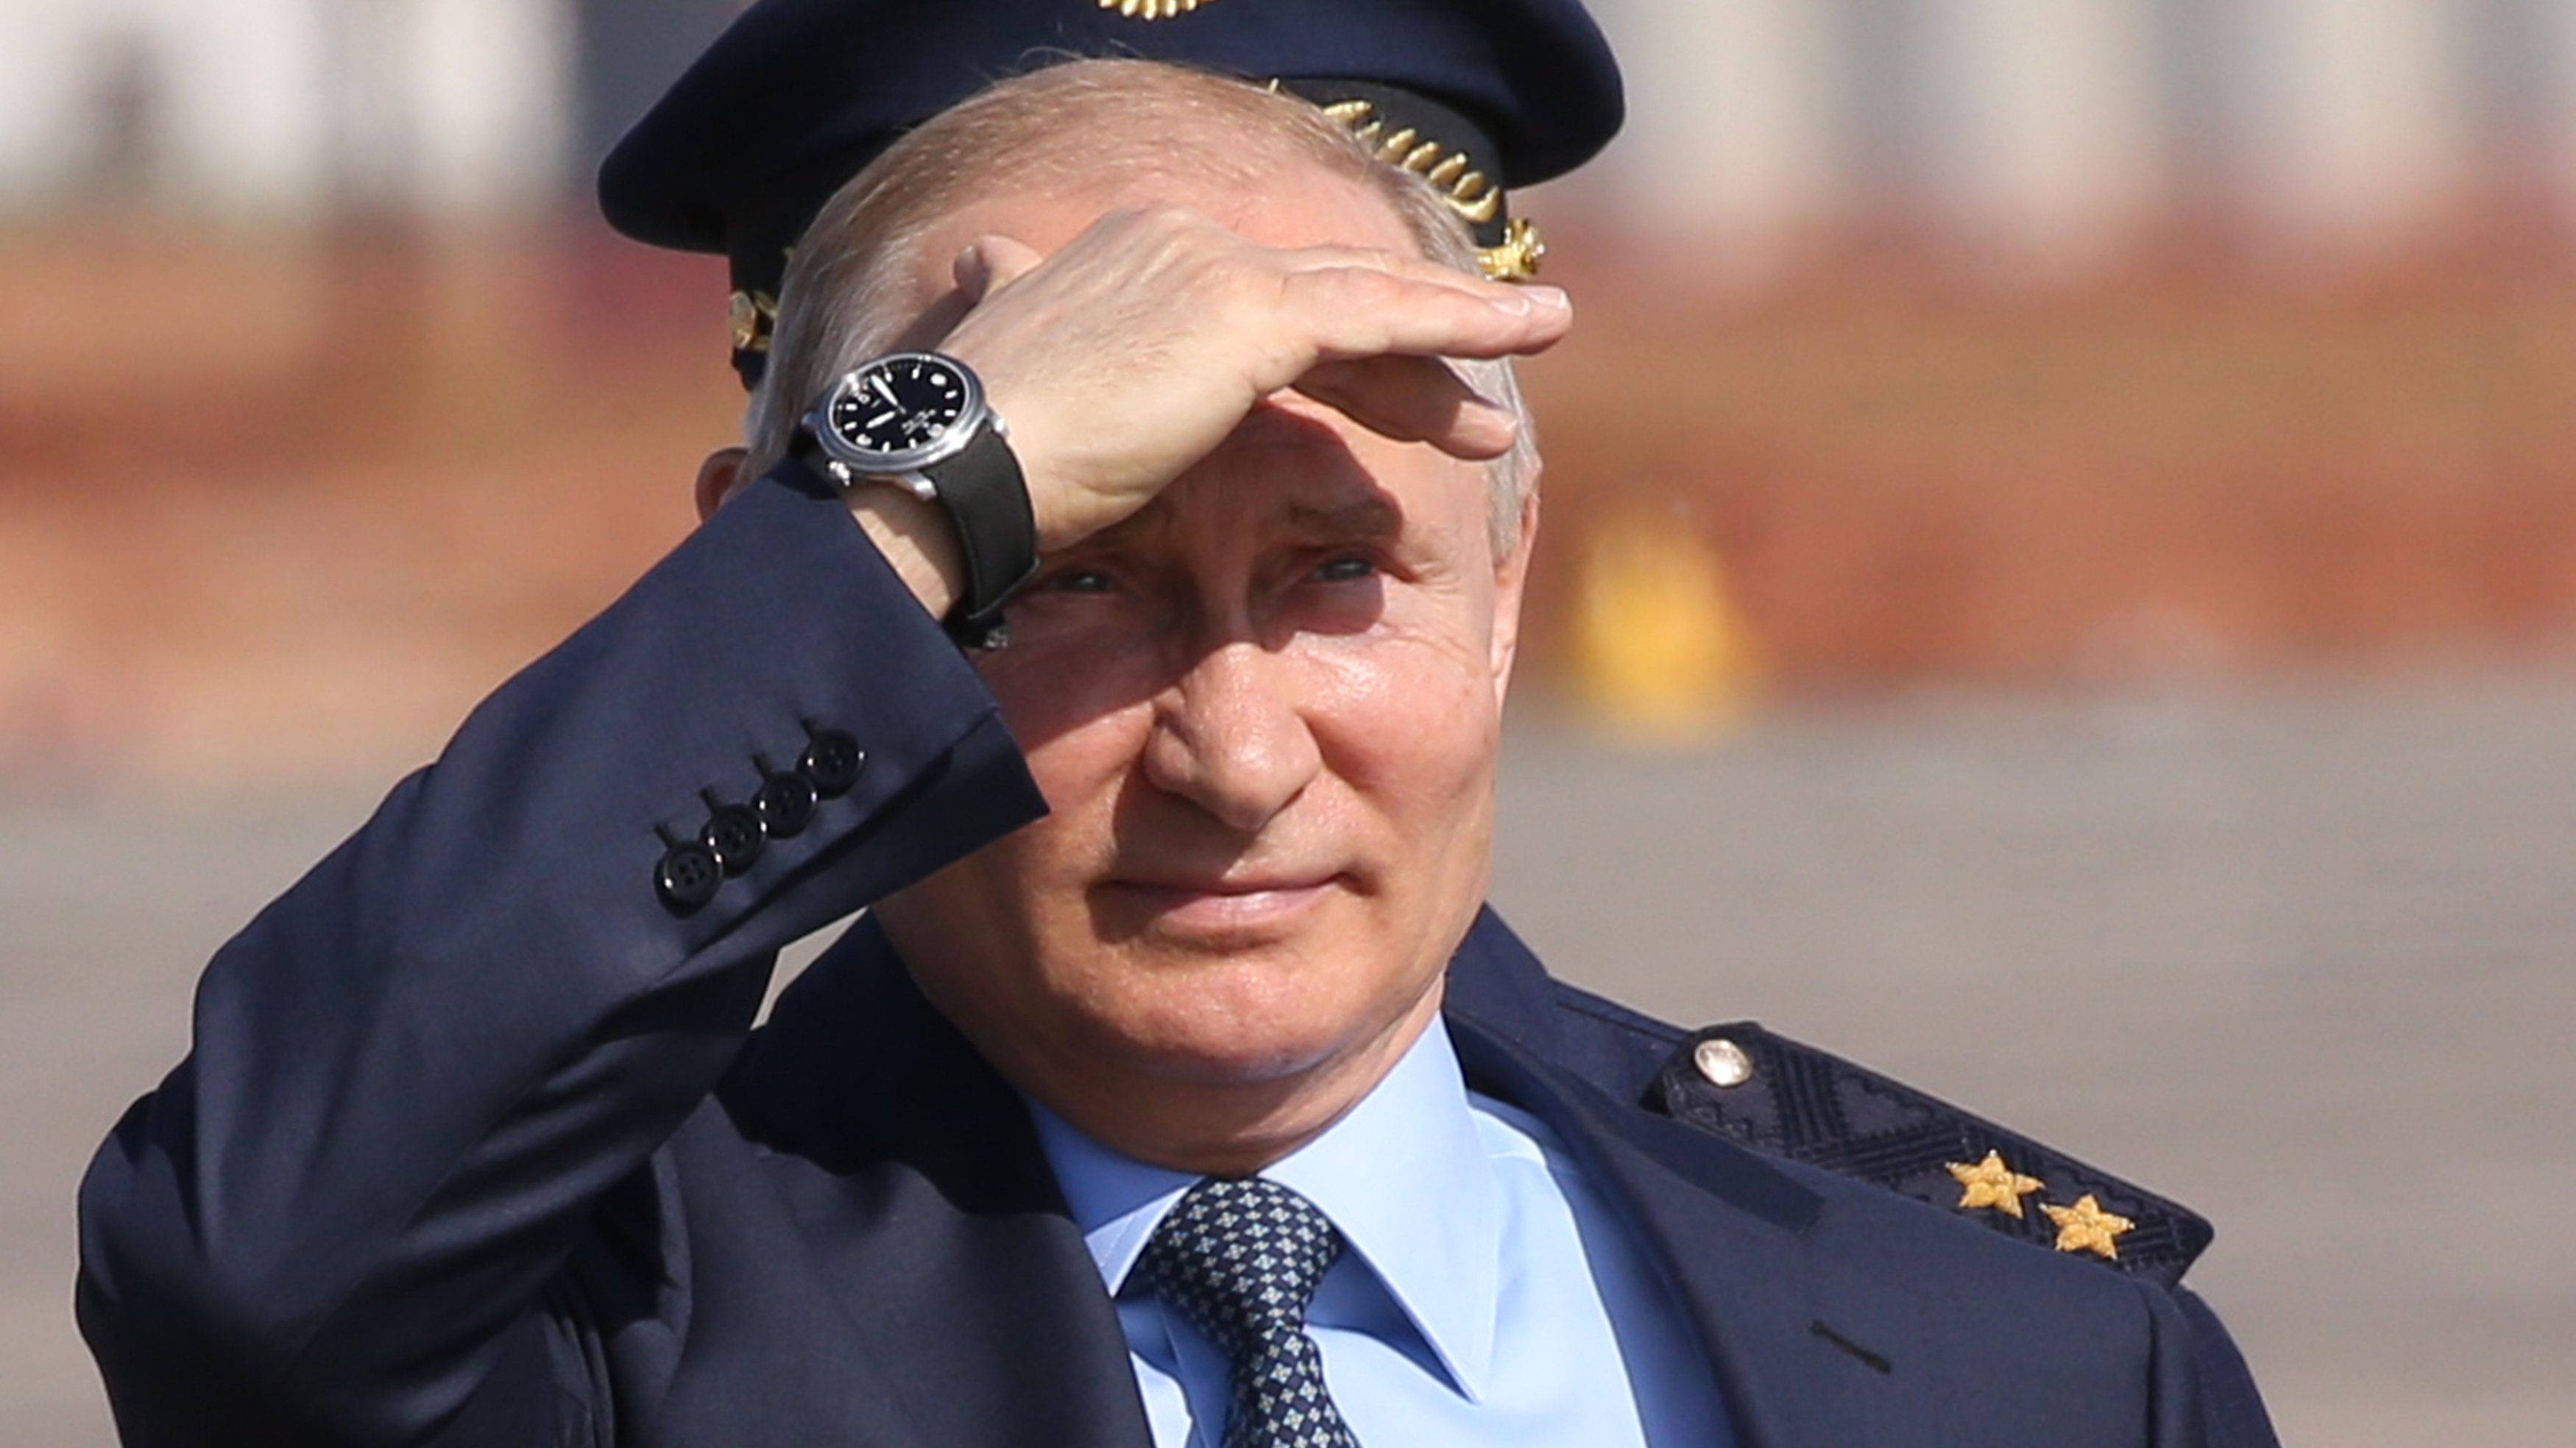 Russian President Vladimir Putin visits the state flight tasting center in Akhtubinsk